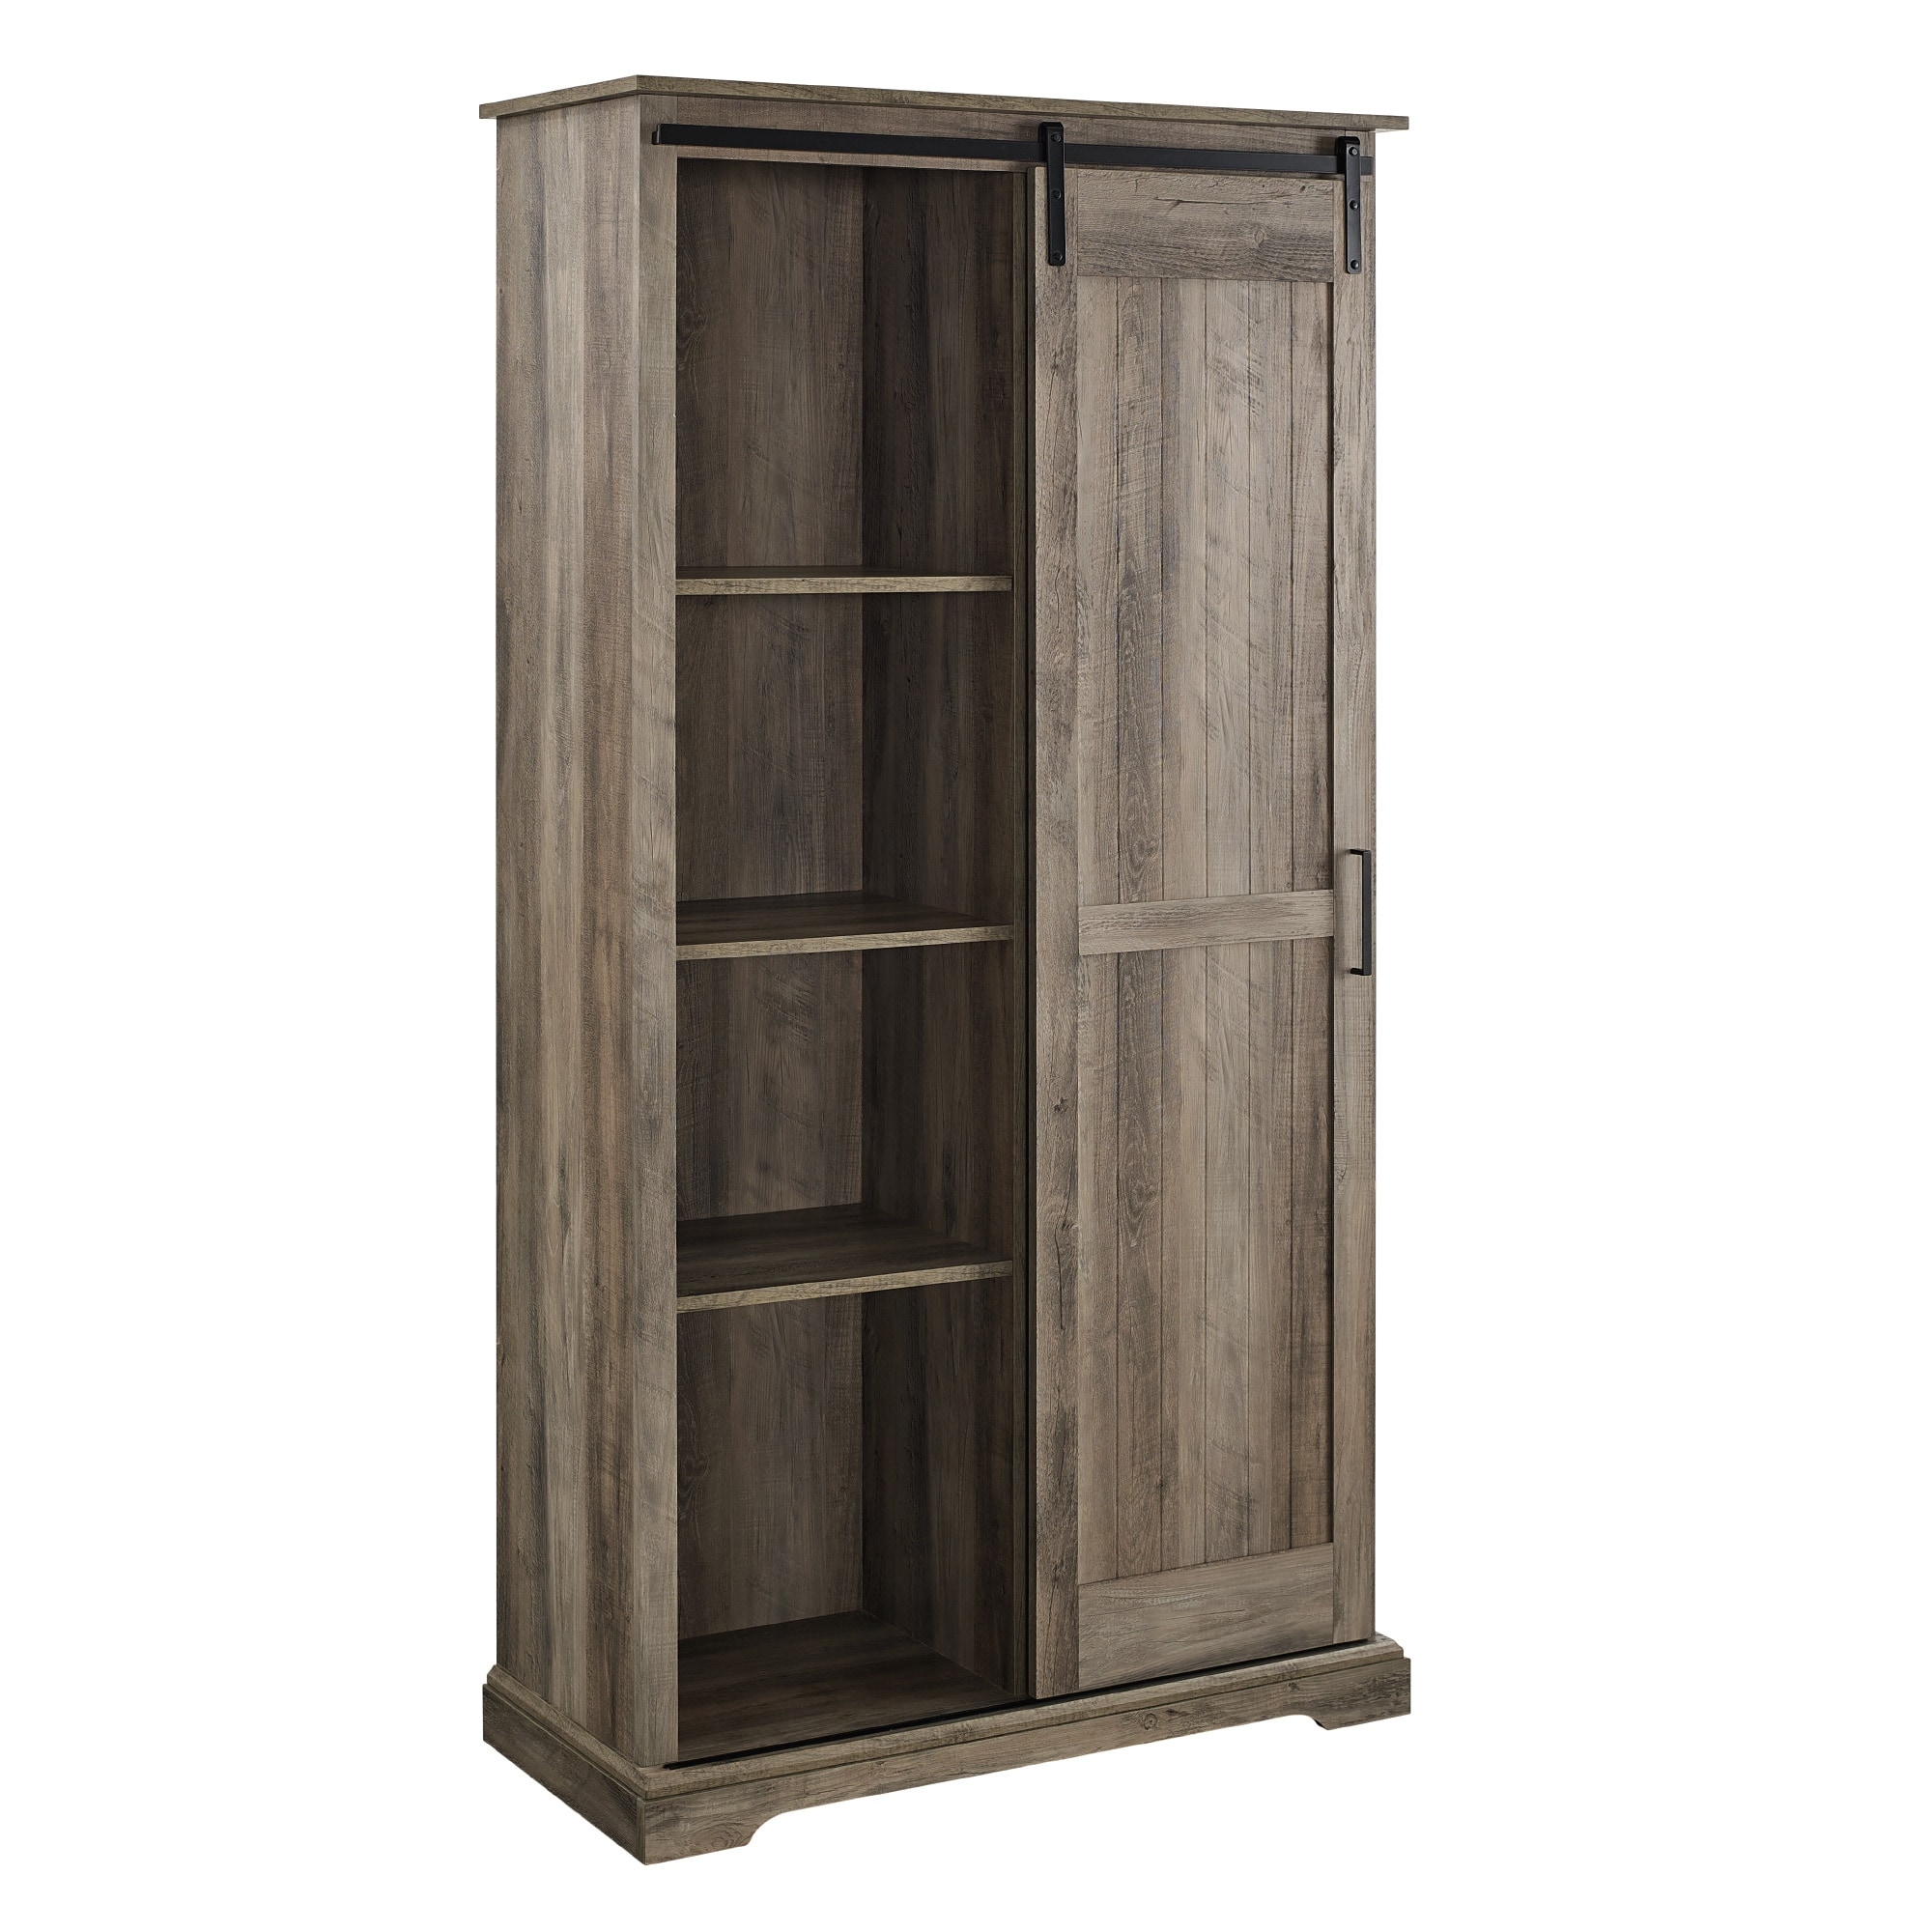 https://ak1.ostkcdn.com/images/products/is/images/direct/f461cdb7fb90228b8a6debdb5eb9925586bcc19c/The-Gray-Barn-Tall-Sliding-Groove-Door-Storage-Cabinet.jpg